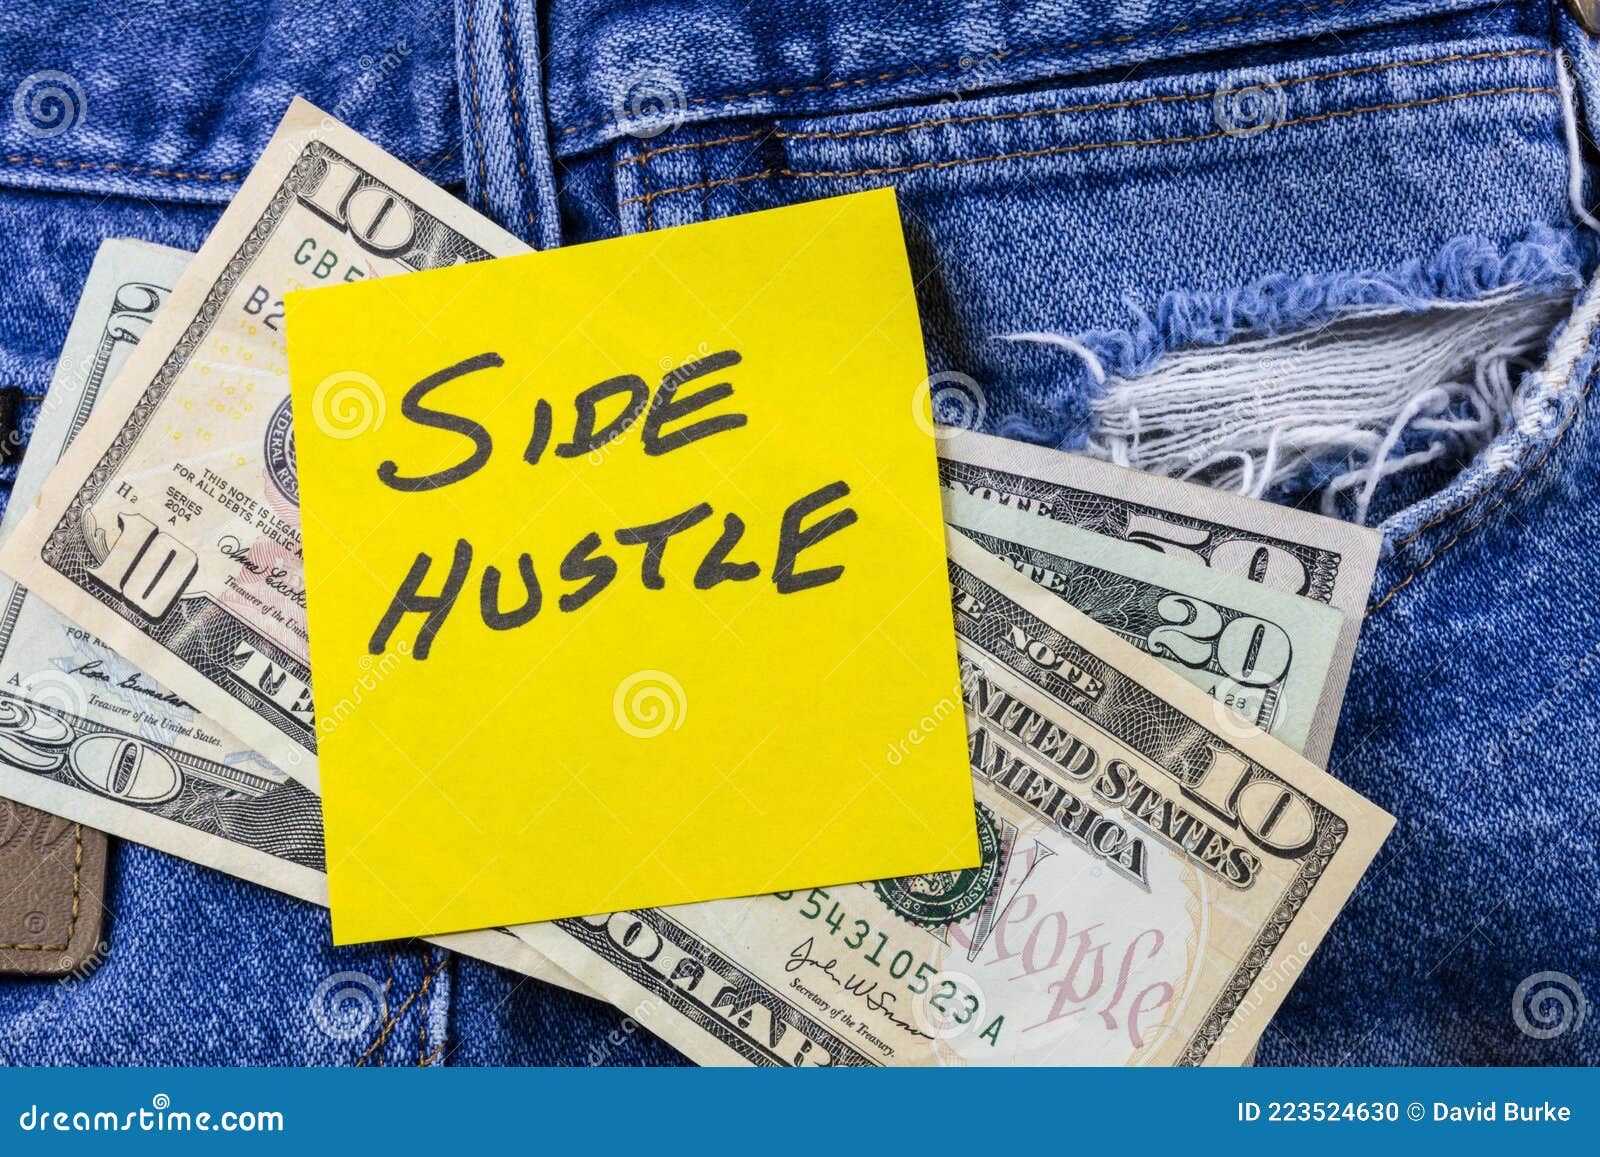 side hustle job self employment entrepreneur freelance gig income ambition